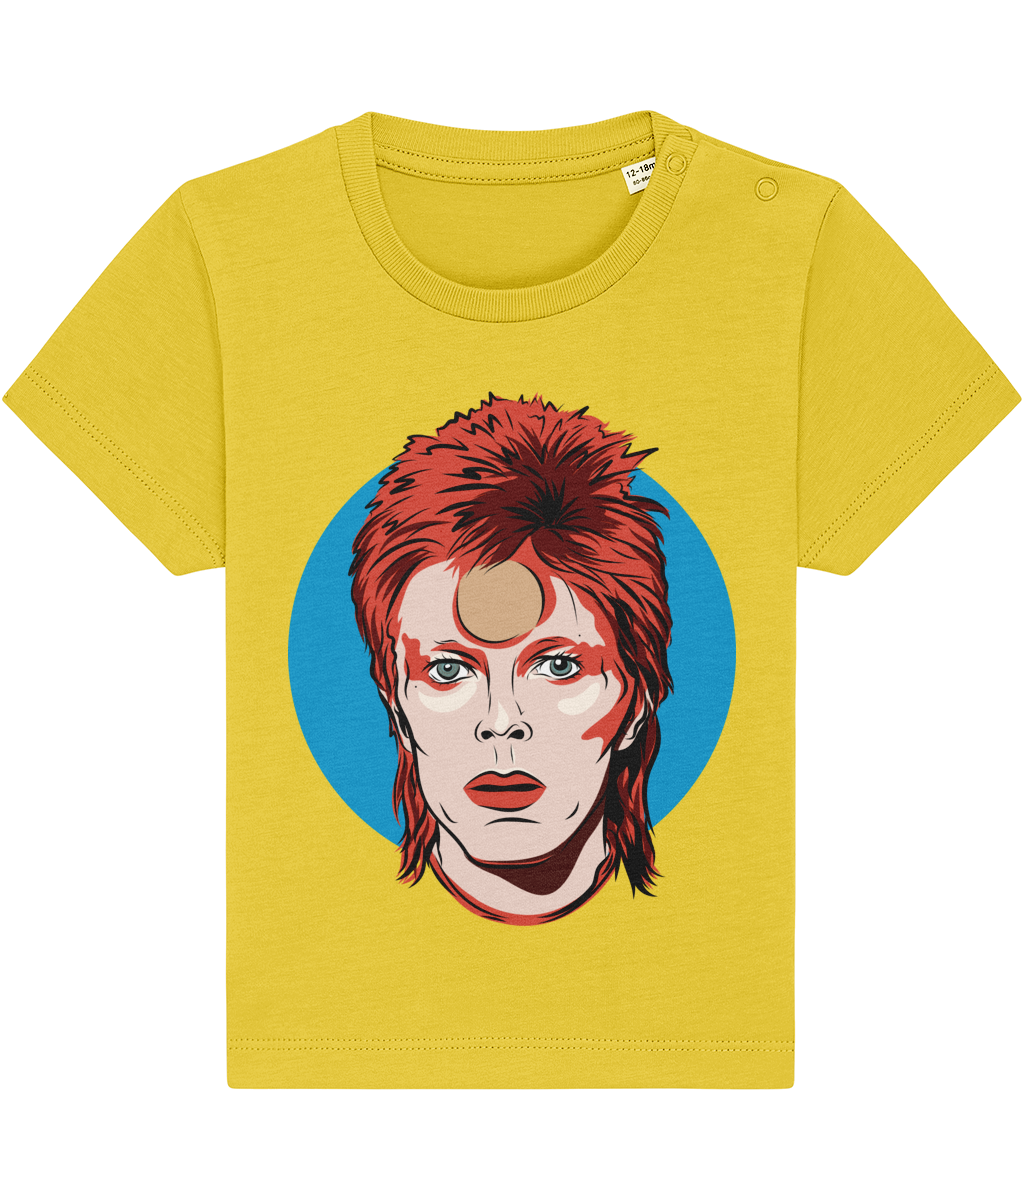 David Bowie t shirt - baby & toddler